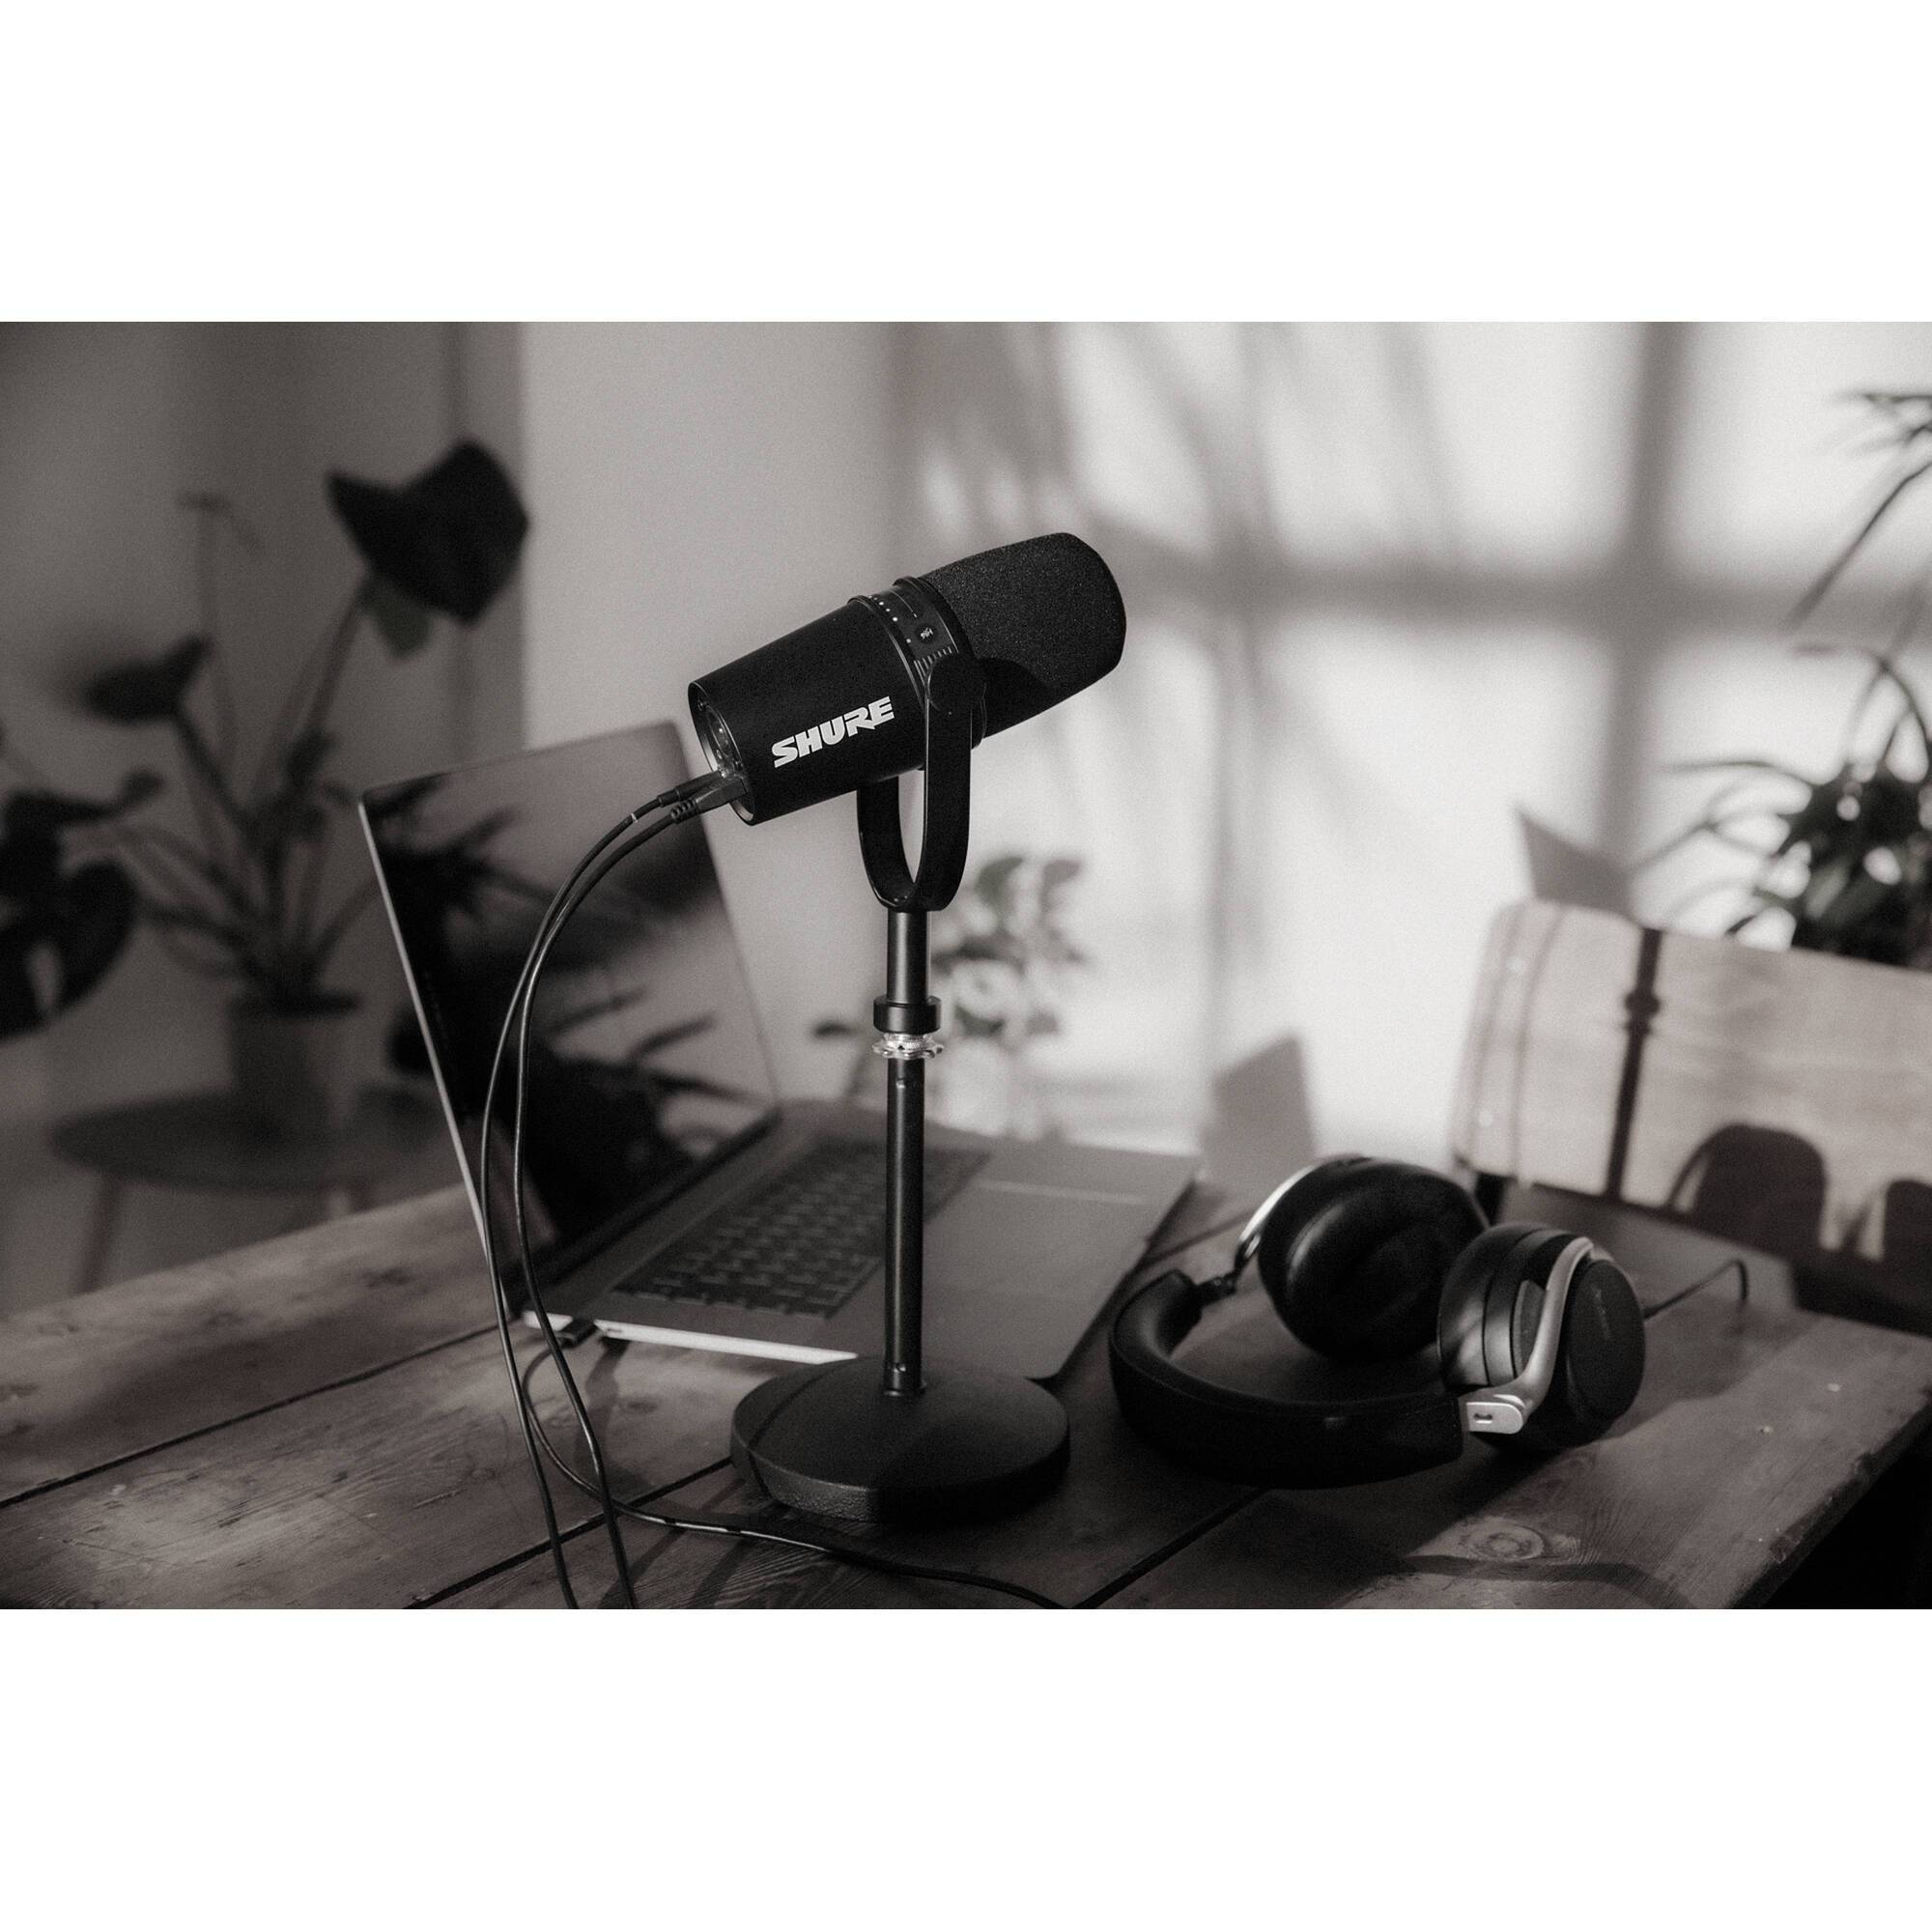 Shure MV7 Black Micrófono Vocal Dinámico para Podcast USB/XLR Micrófonos Dinámicos SHURE 